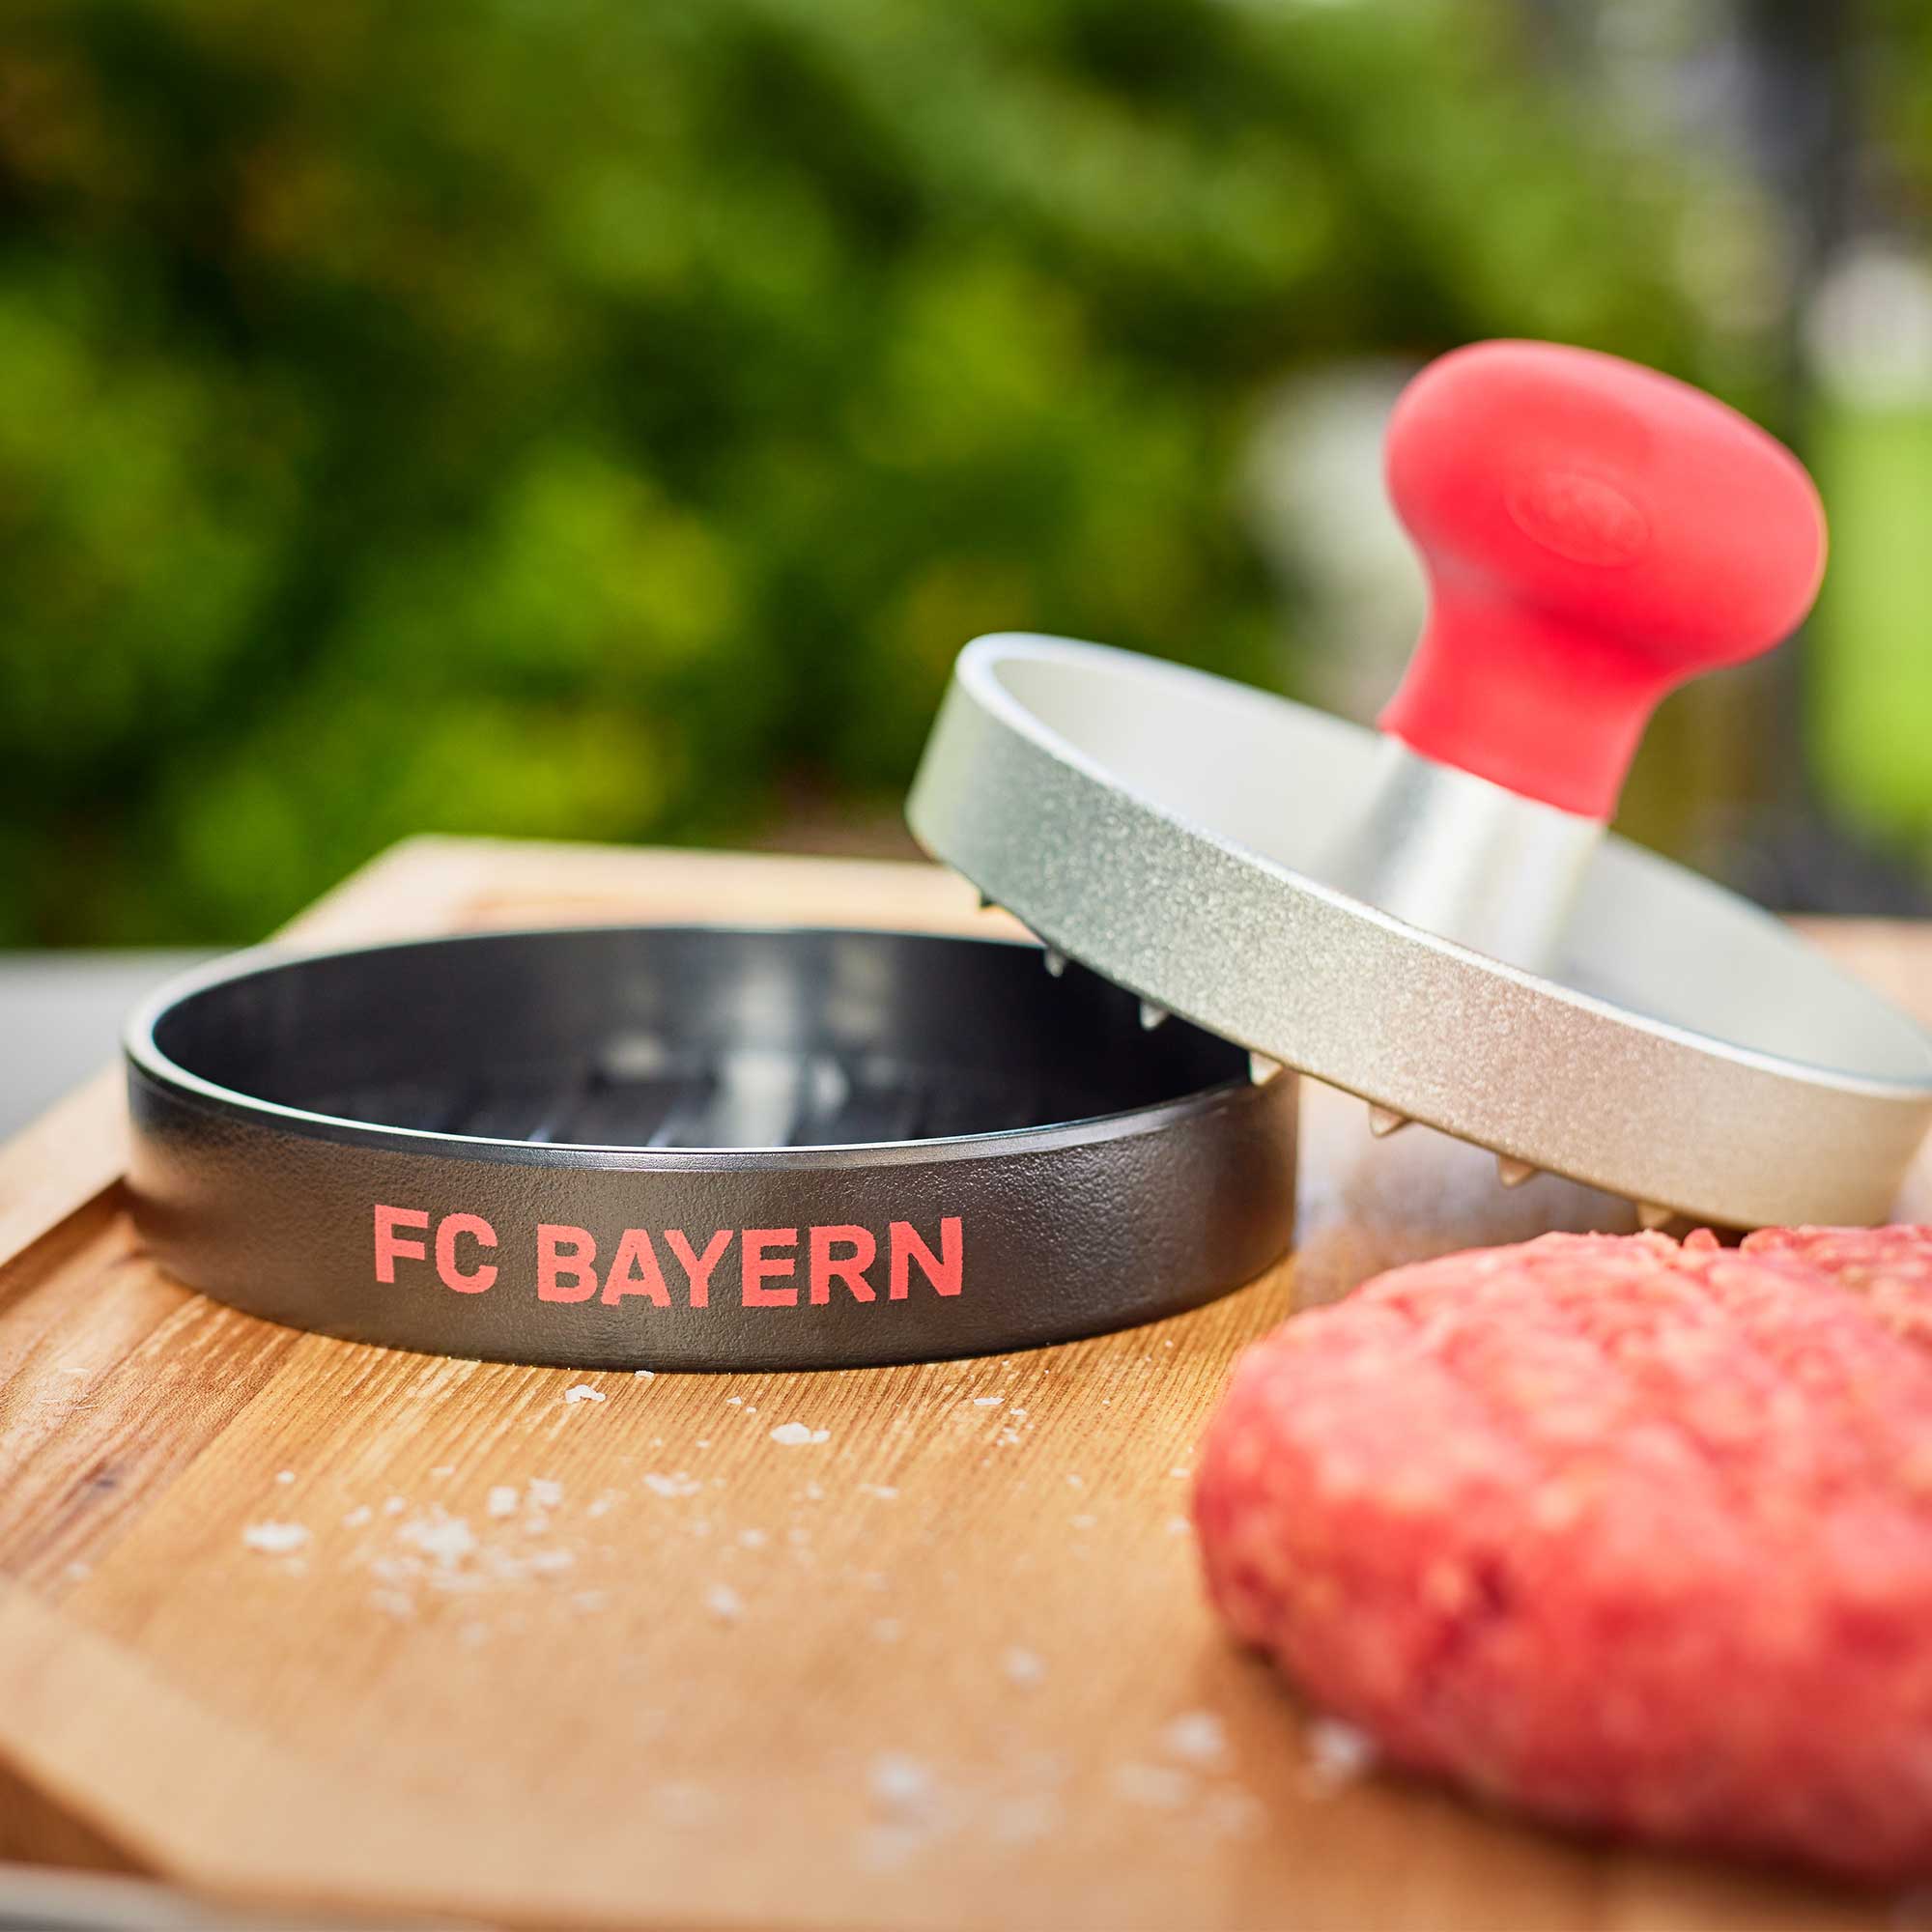 FC Bayern Edition - Burgerpresse